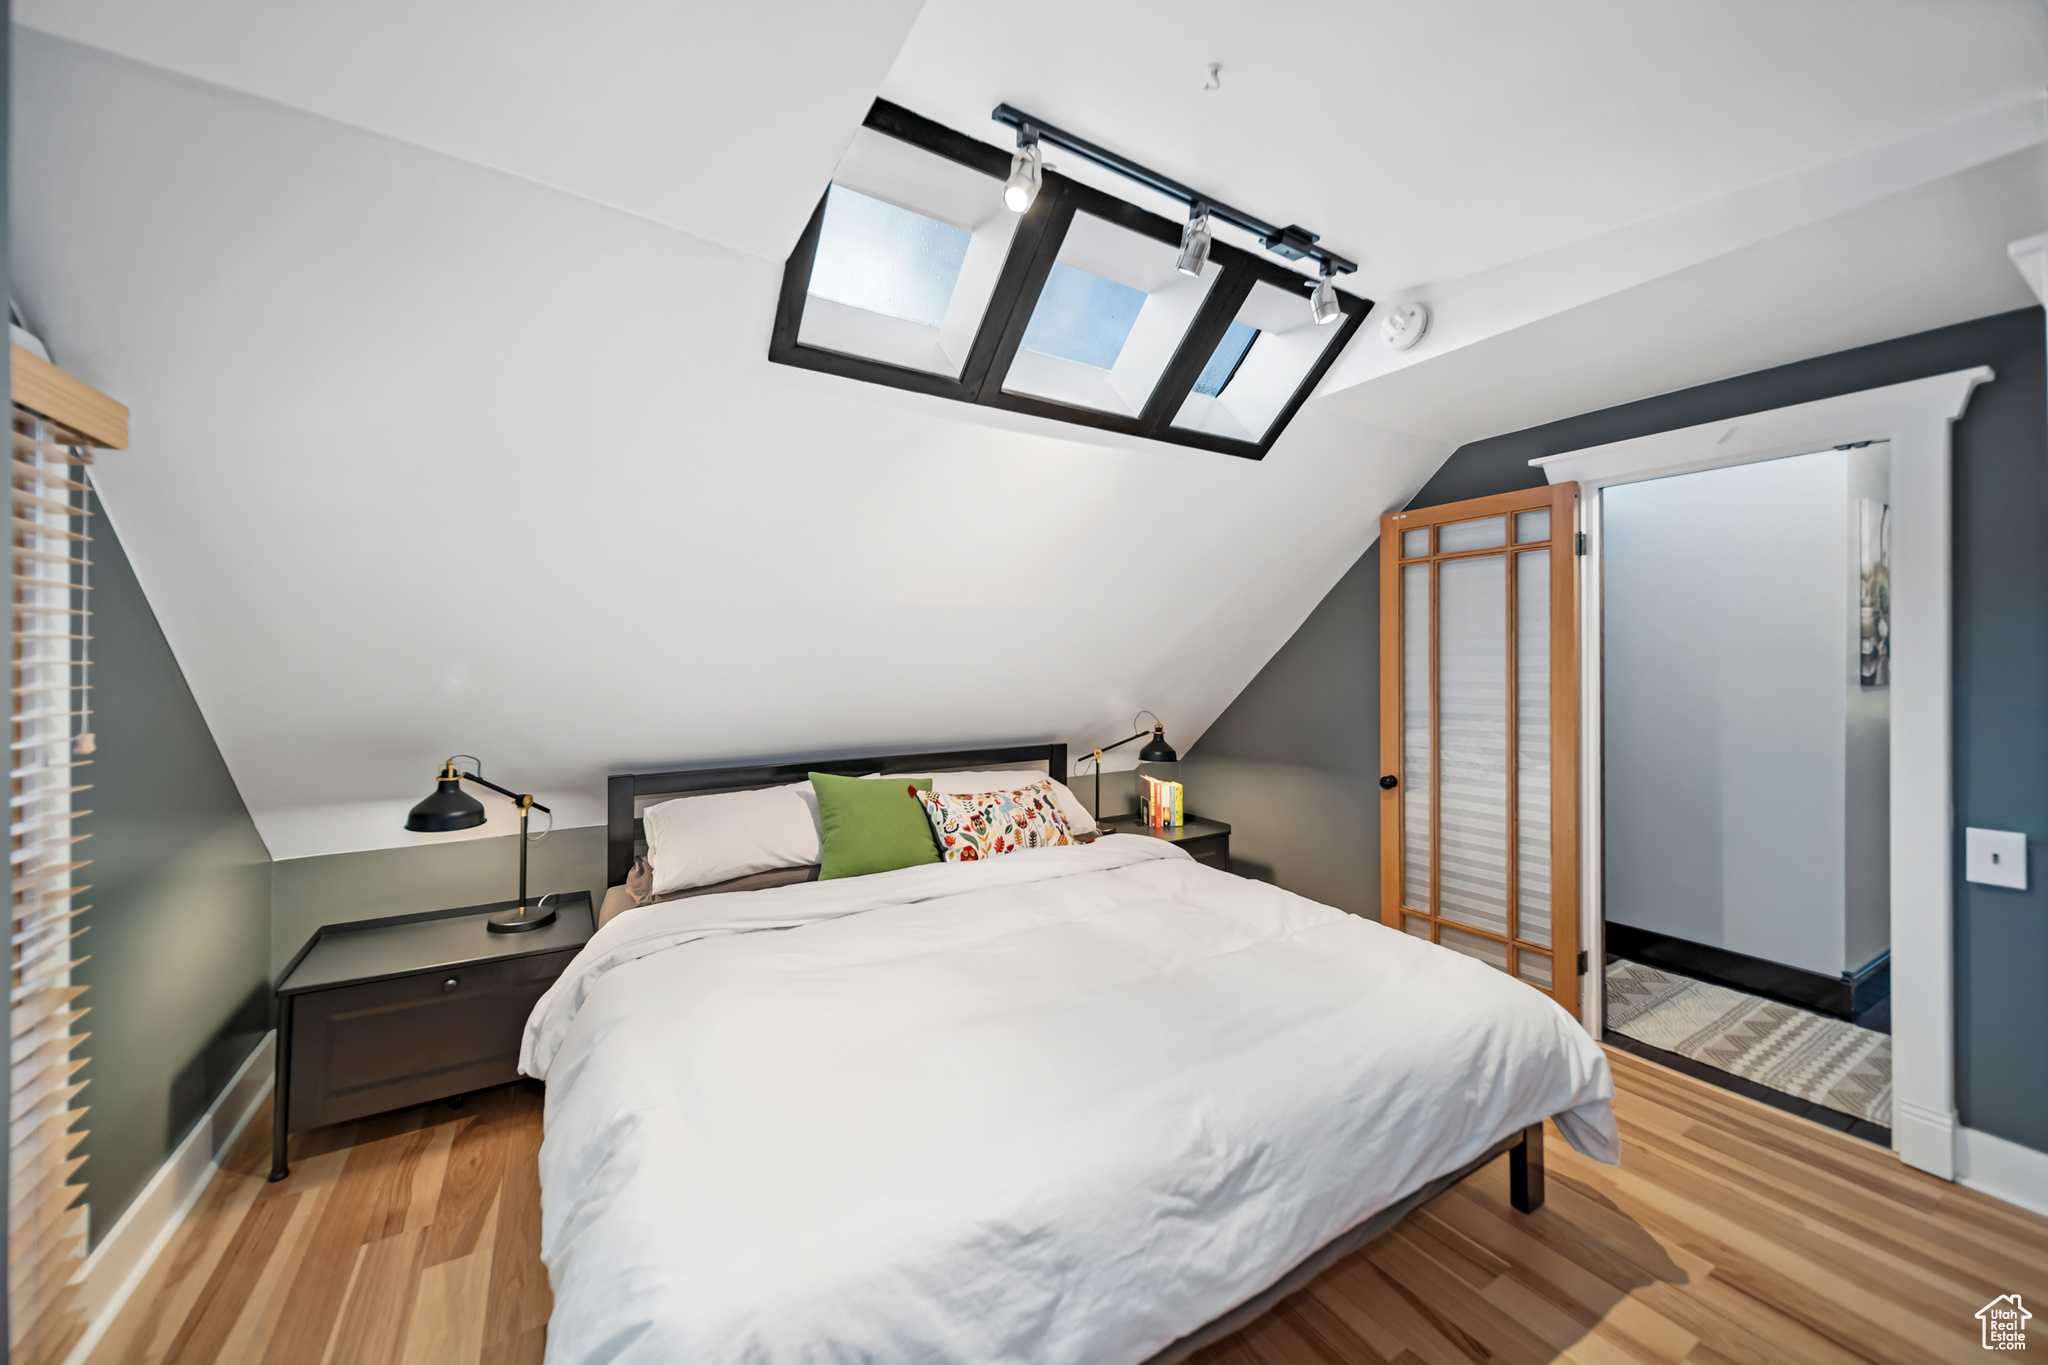 Bedroom 1, Lofted Ceiling w/ Skylights, Track Lighting, Wood Blinds, Wood Floor, Custom Trim